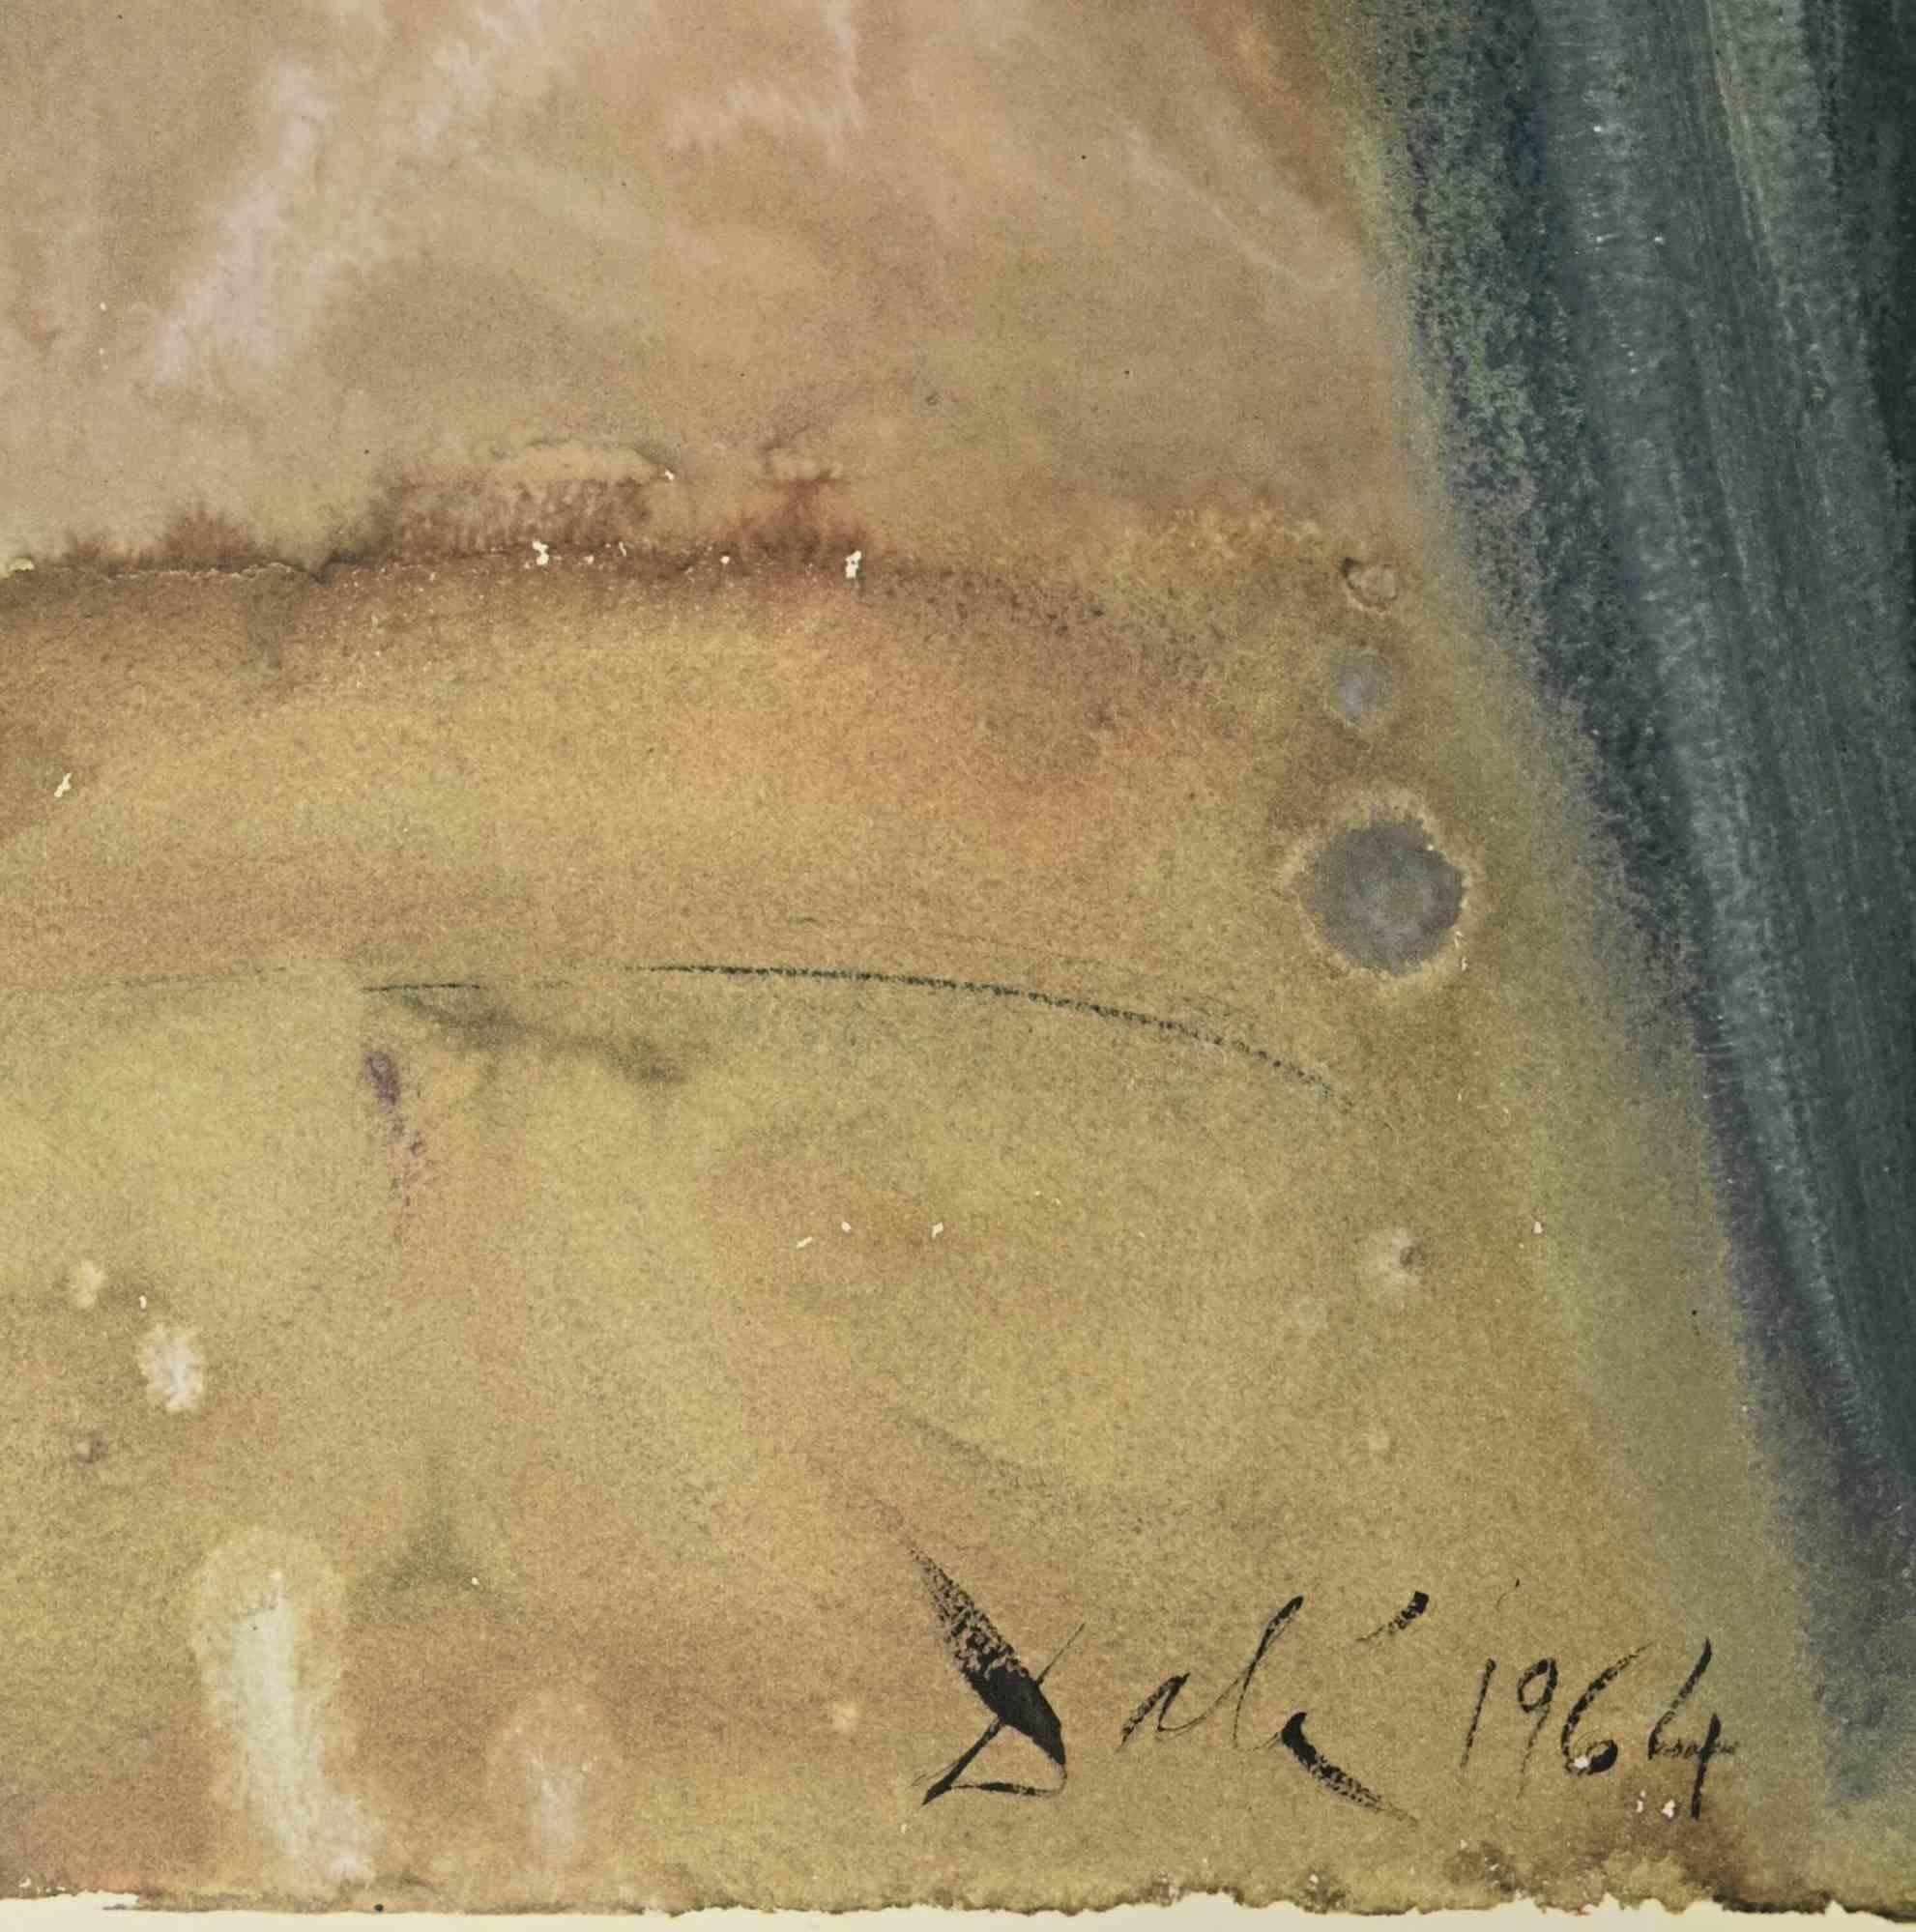 Plange, Virgo, Accinta Sacco - Lithograph - 1964 - Print by Salvador Dalí